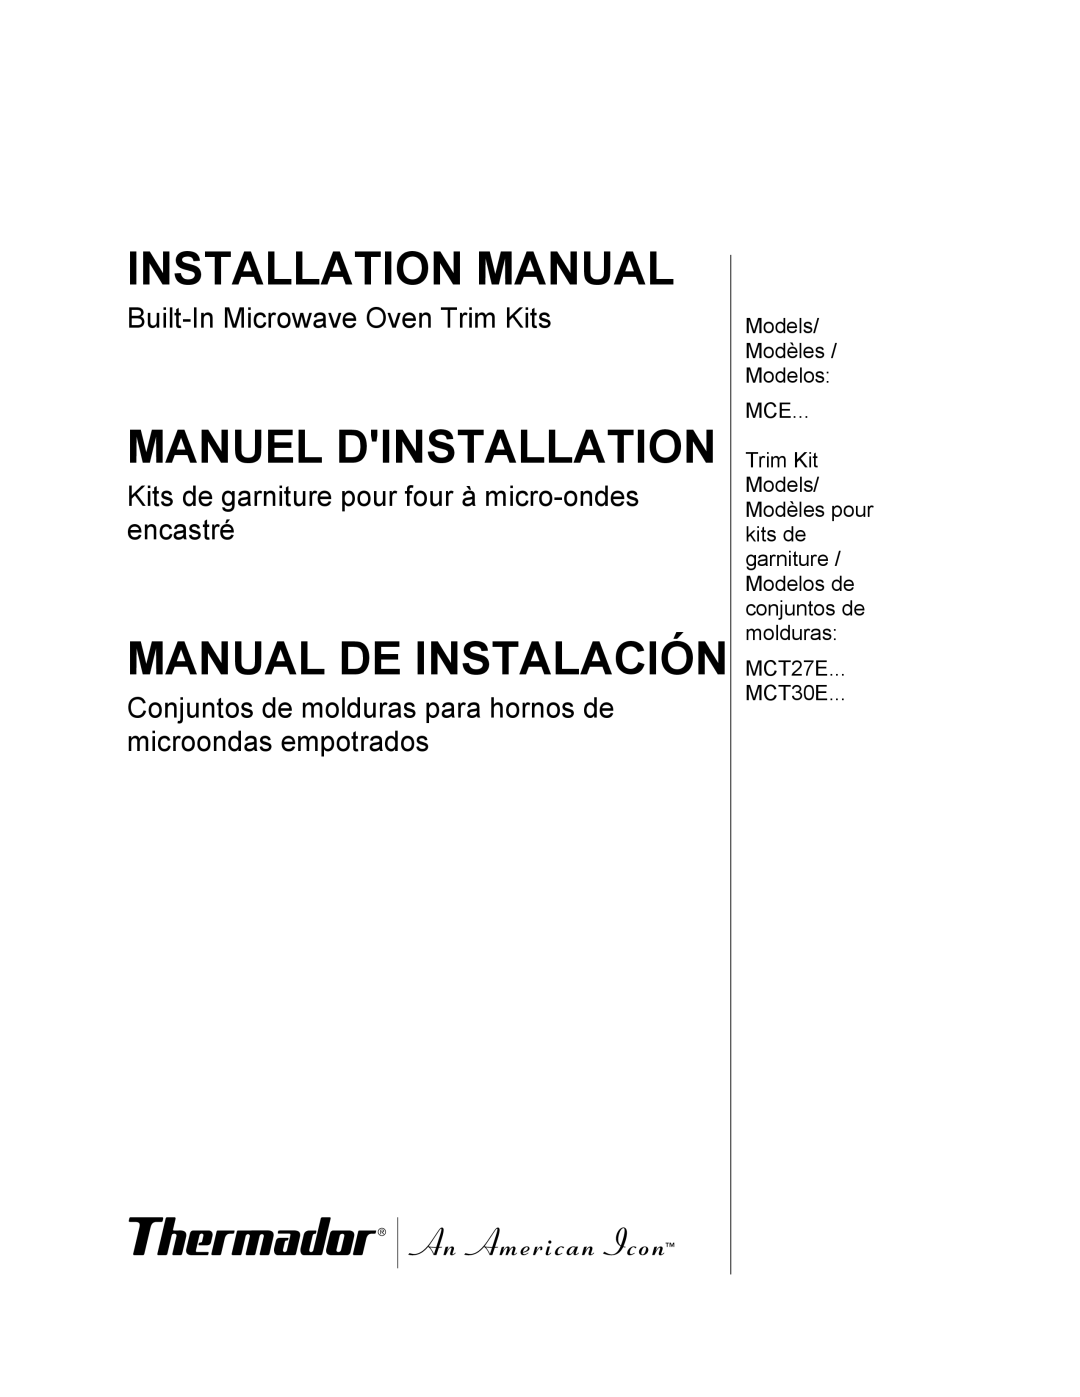 Thermador MCT30E, MCT27E installation manual Installation Manual, Manuel Dinstallation, Manual De Instalación 